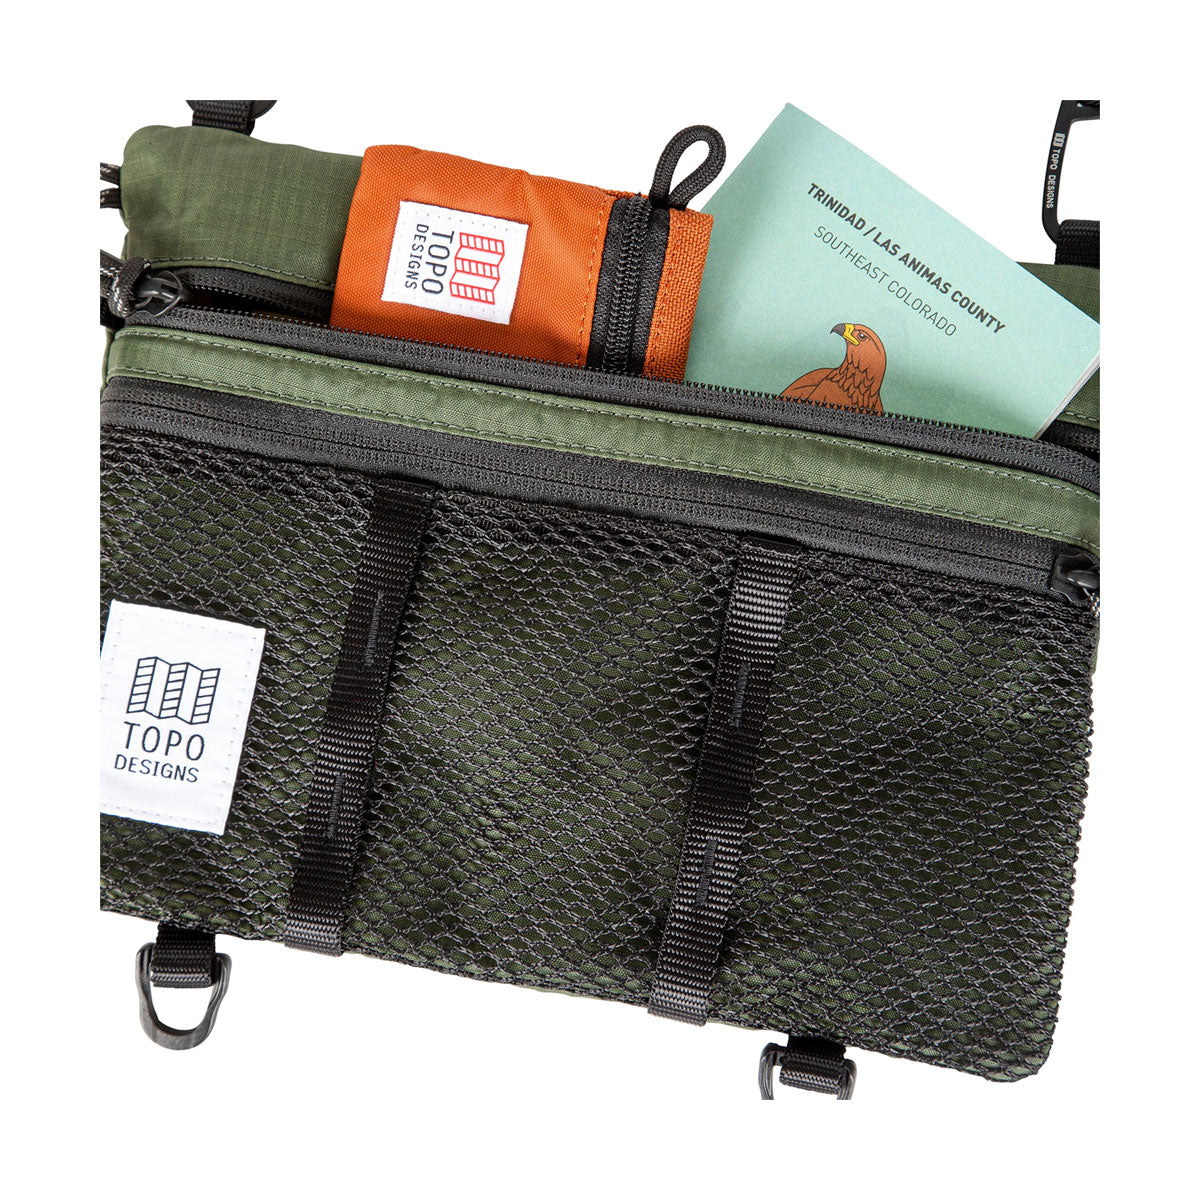 Topo Designs : Mountain Accessory Shoulder Bag : Geode Green/Black